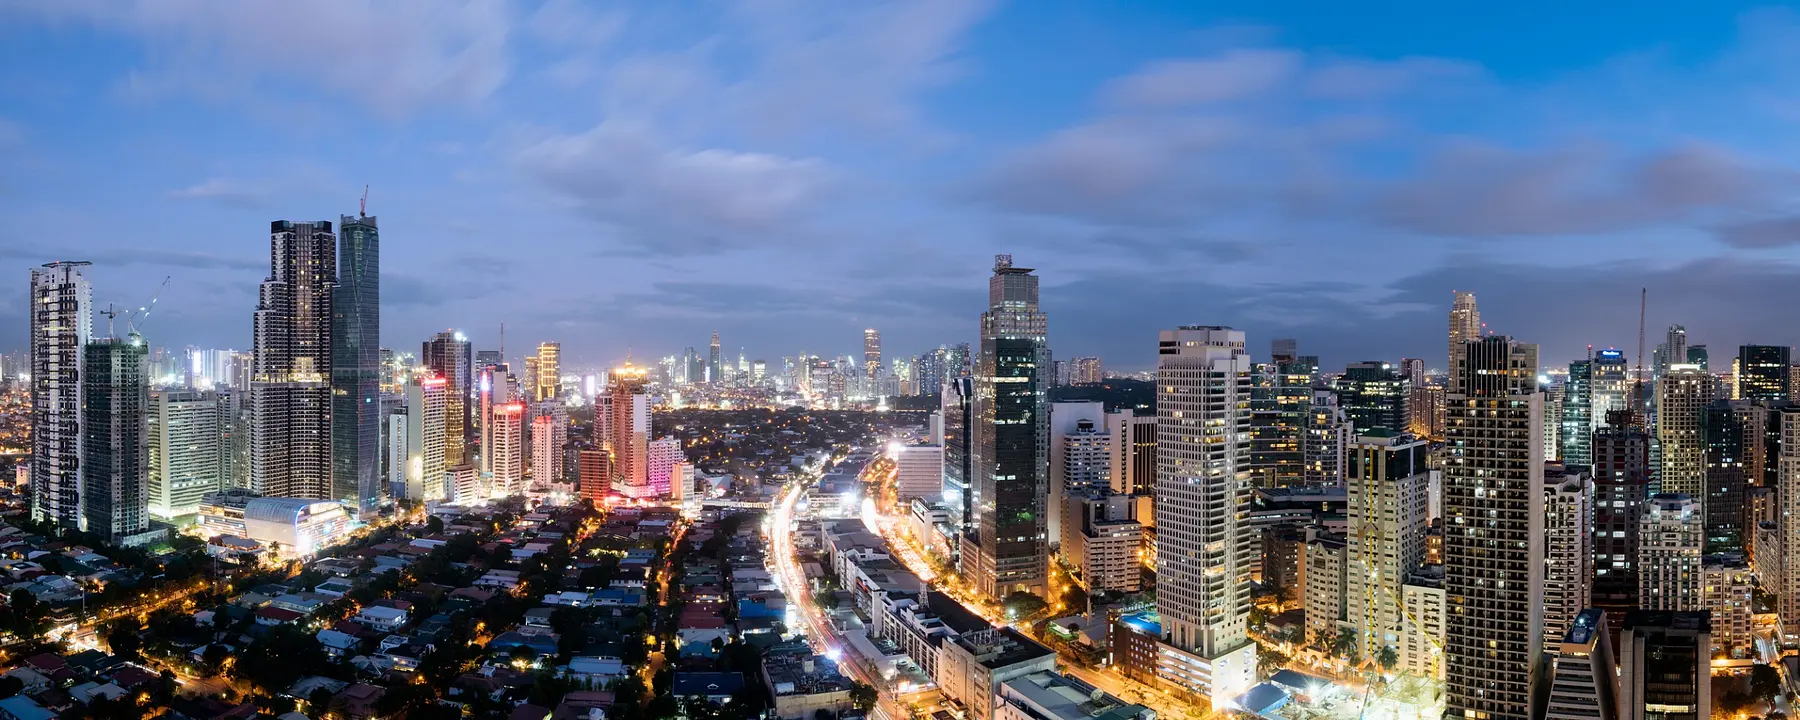 Manila skyline